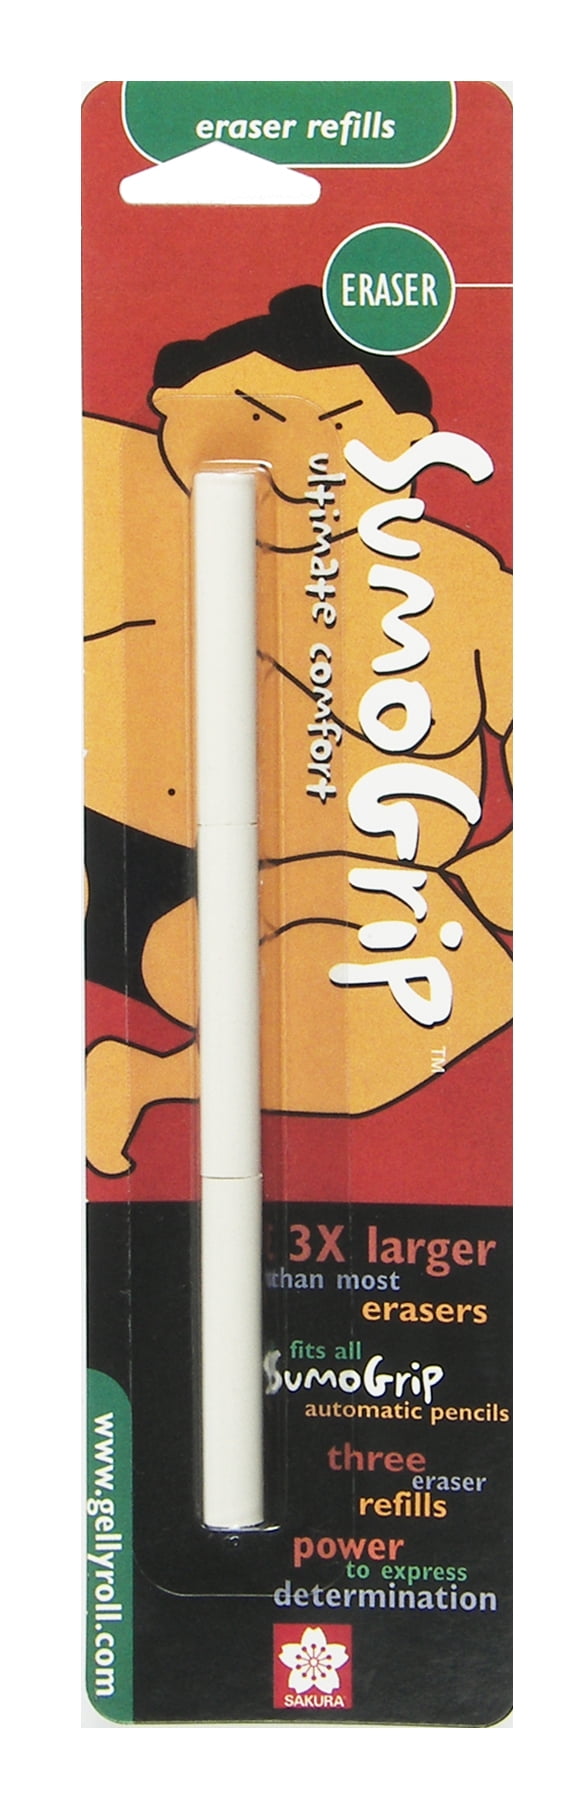 Sakura SumoGrip Mechanical Pencil Eraser Refills, 3 Pieces